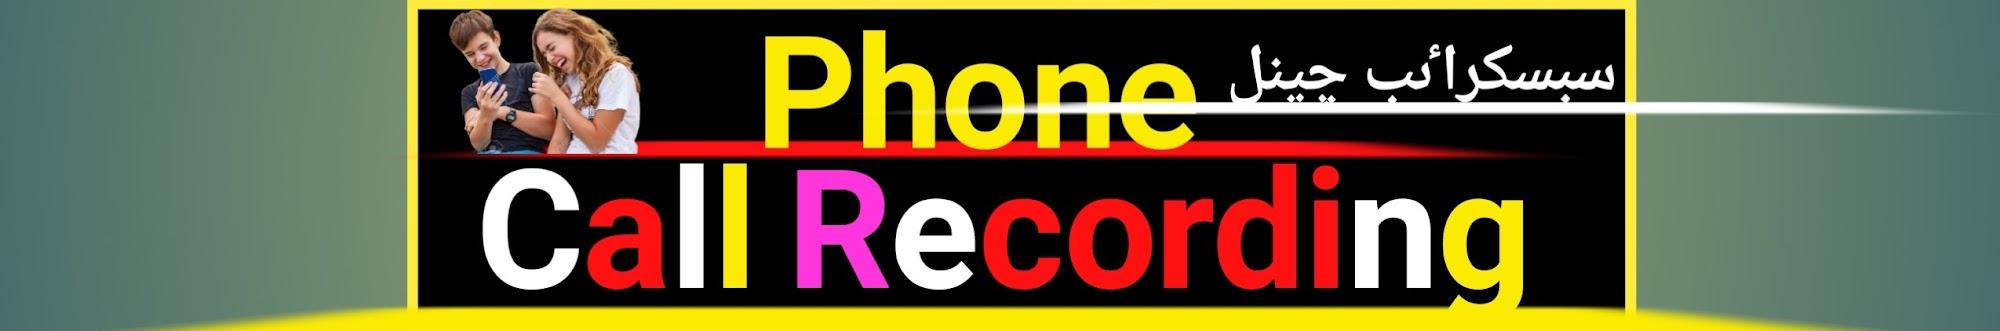 Phone call recording